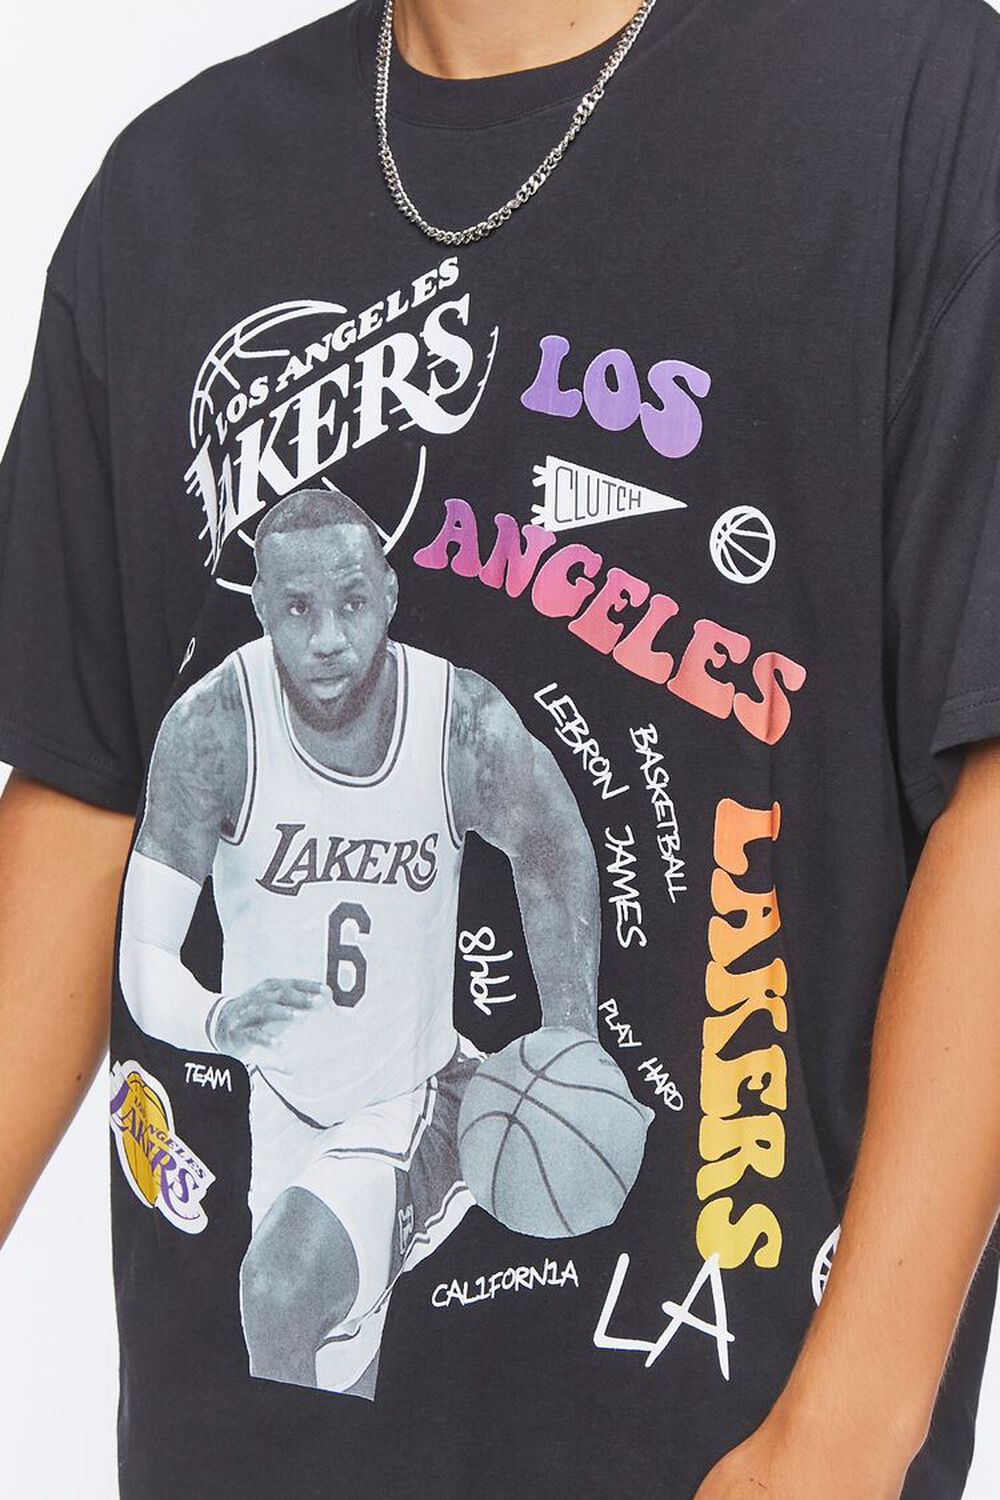 Lebron James Los Angeles Lakers shirt medium NBA Vintage Look Graphic Tee